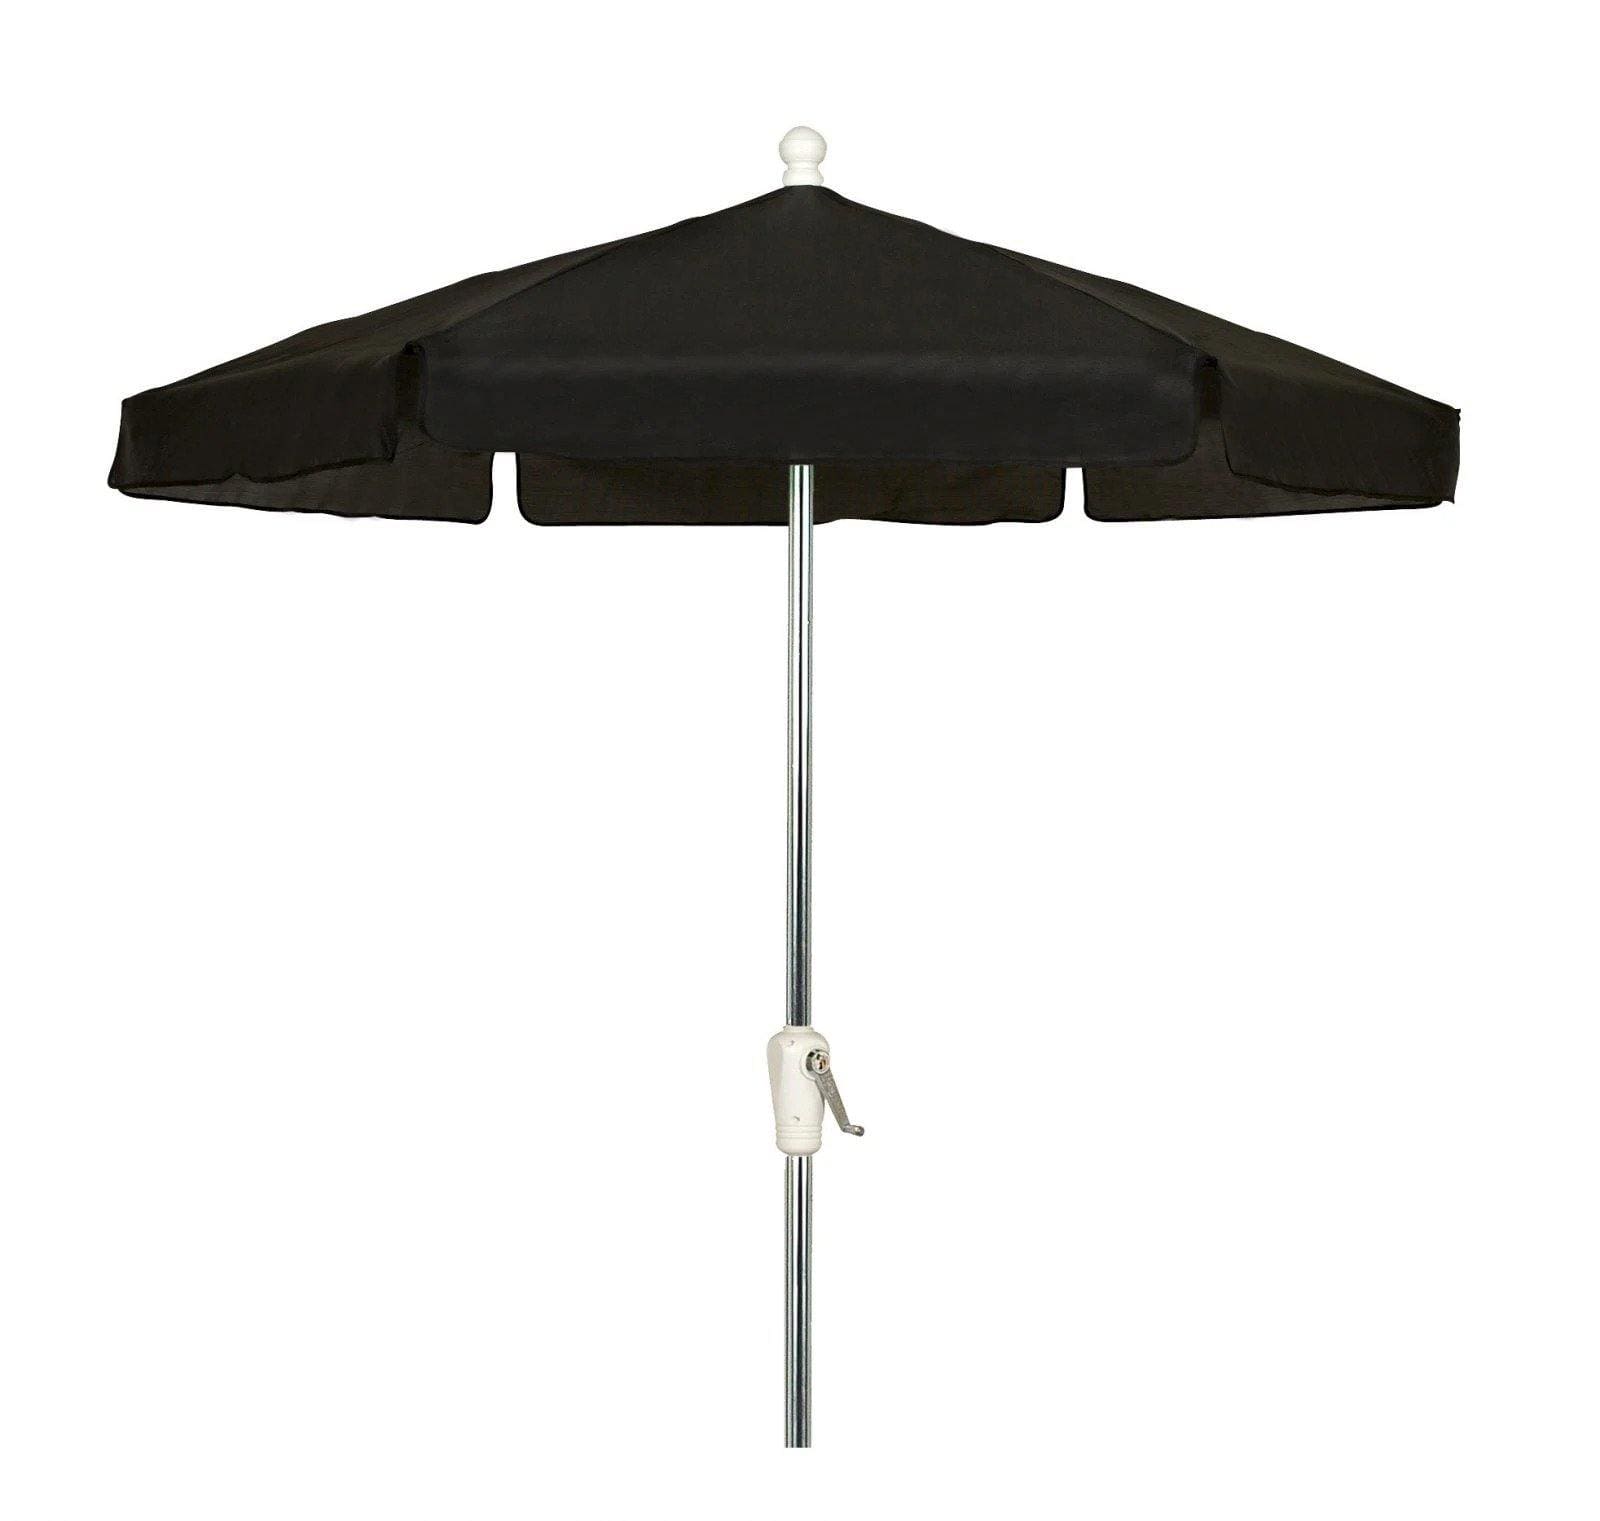 Fiberbuilt Table Umbrellas Black 7.5' Hex Garden Umbrella 6 Rib Push Up Champagne Bronze wit Vinyl Coated Weave Canopy